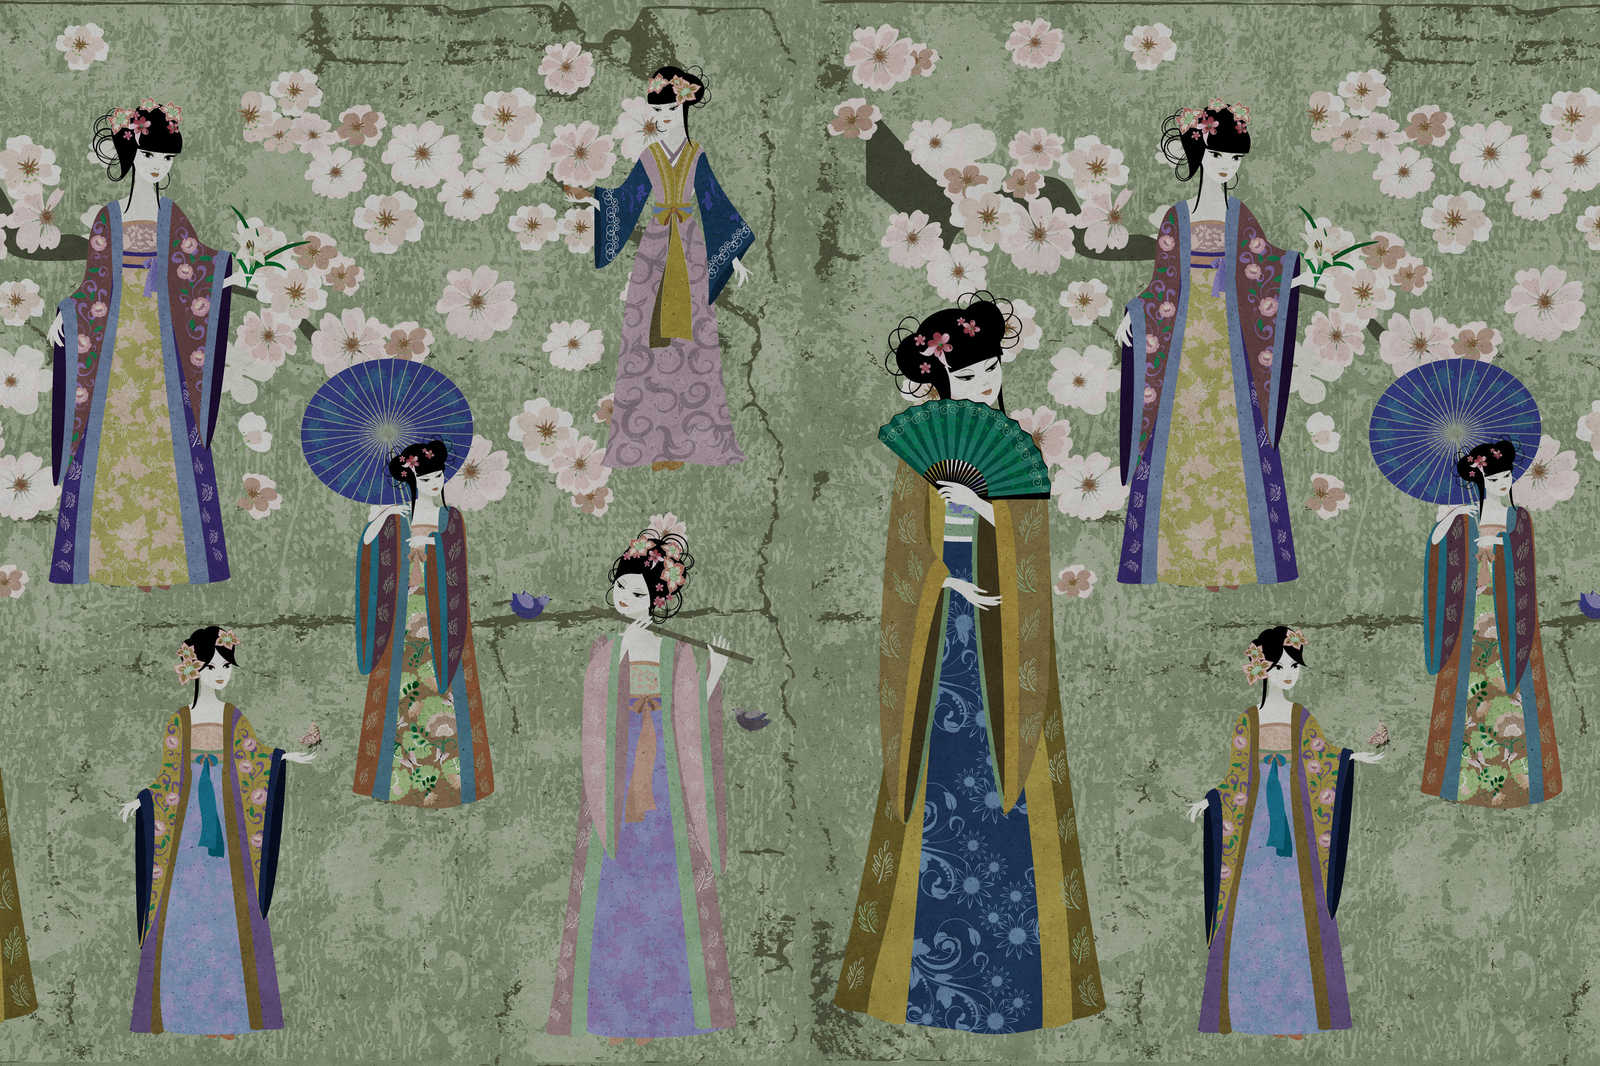             Leinwandbild Japan Comic mit Kirschblüten | grün, blau – 0,90 m x 0,60 m
        